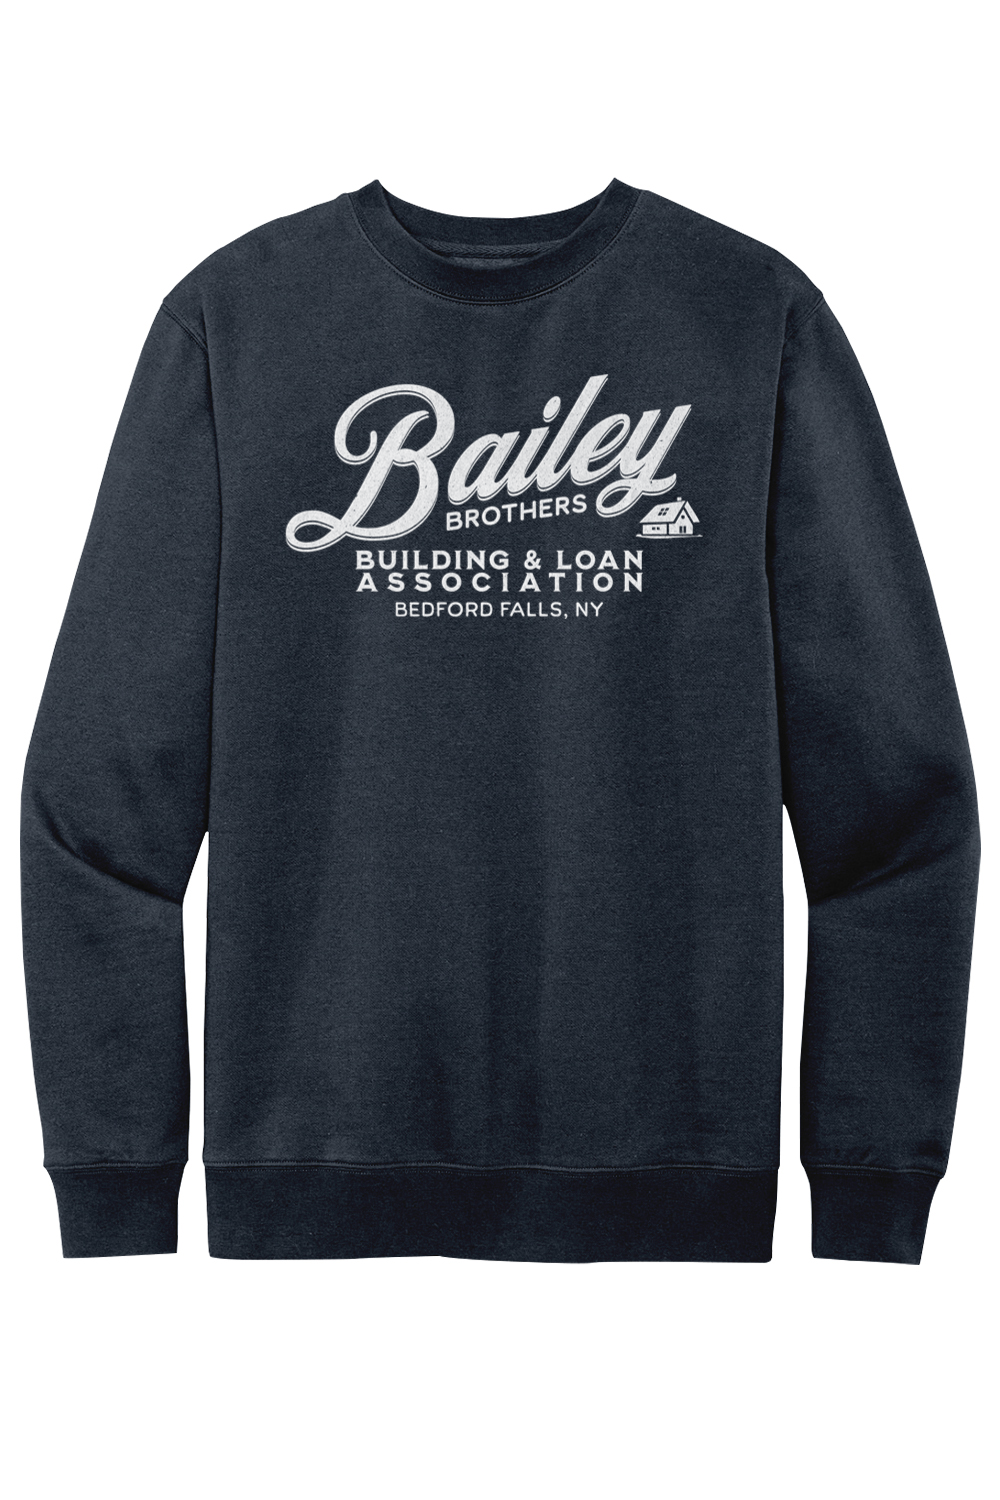 Bailey Brothers Building & Loan - It's a Wonderful Life - Fleece Crewneck Sweatshirt - Yinzylvania